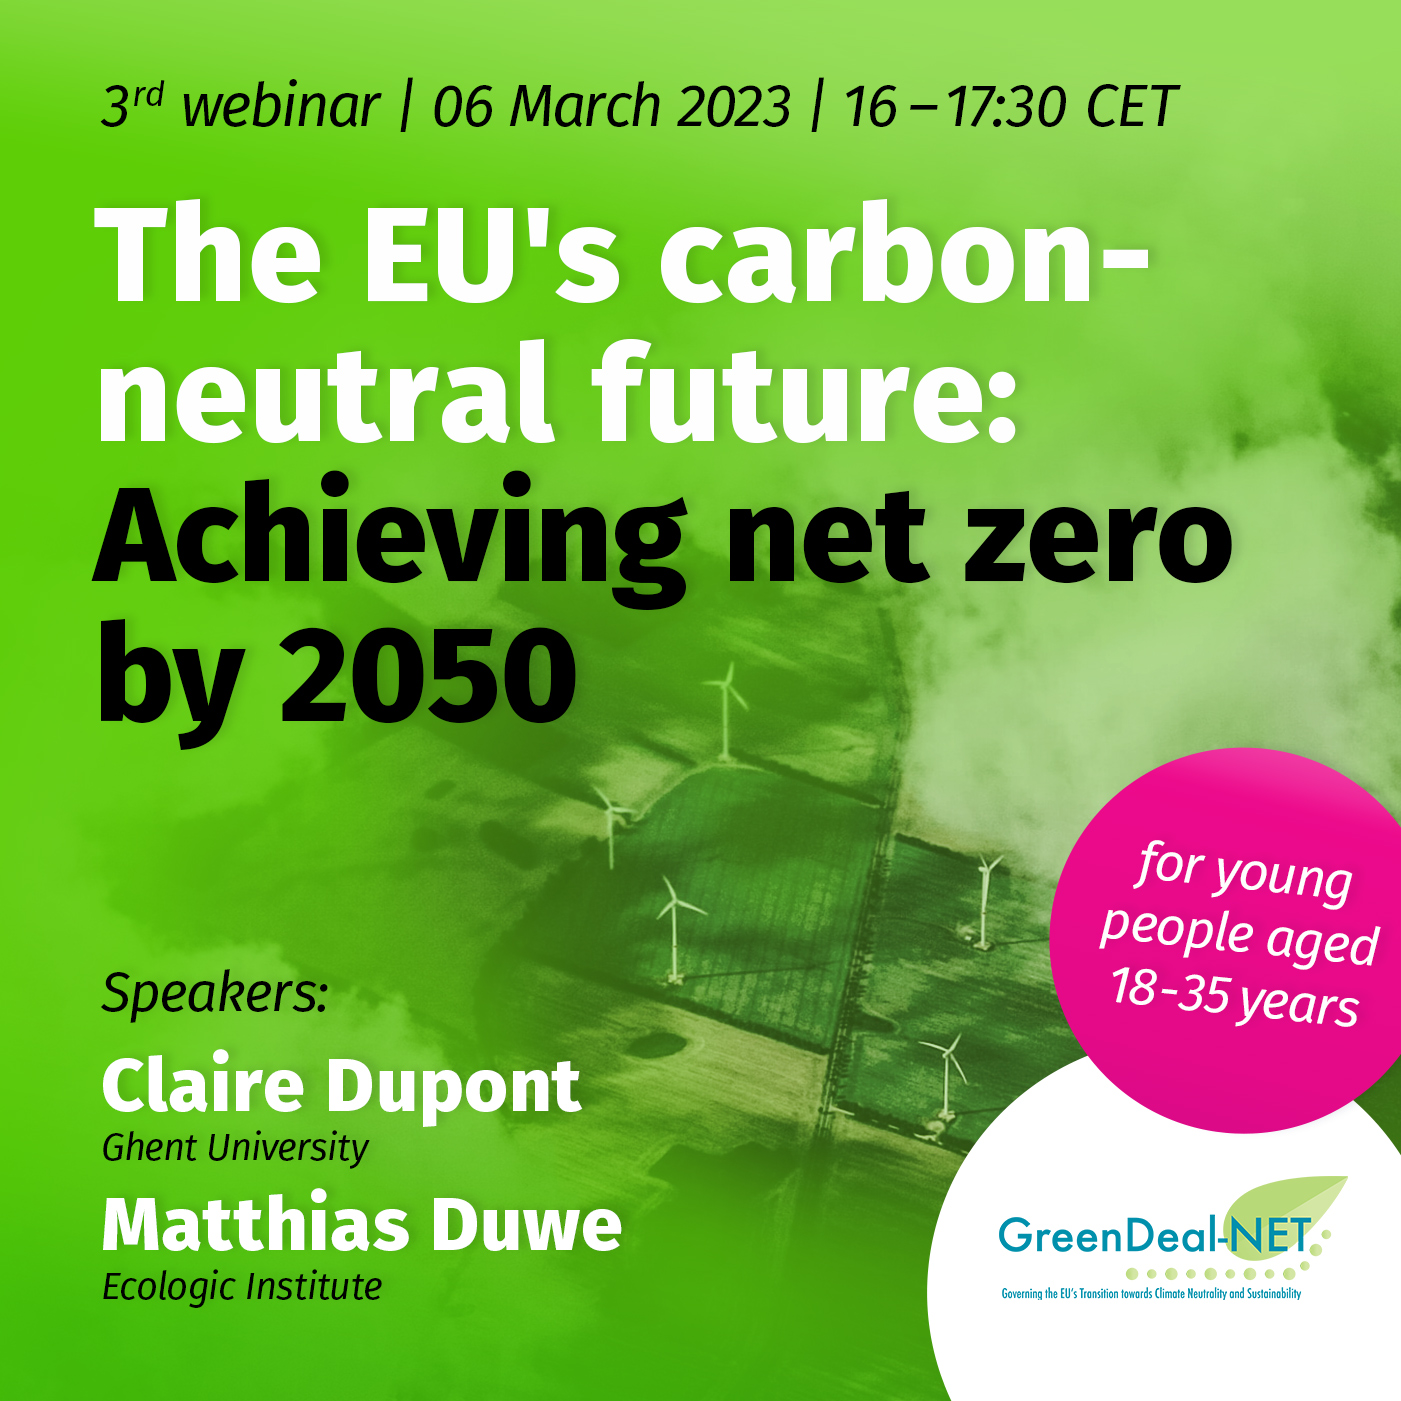 The EU's carbon-neutral future